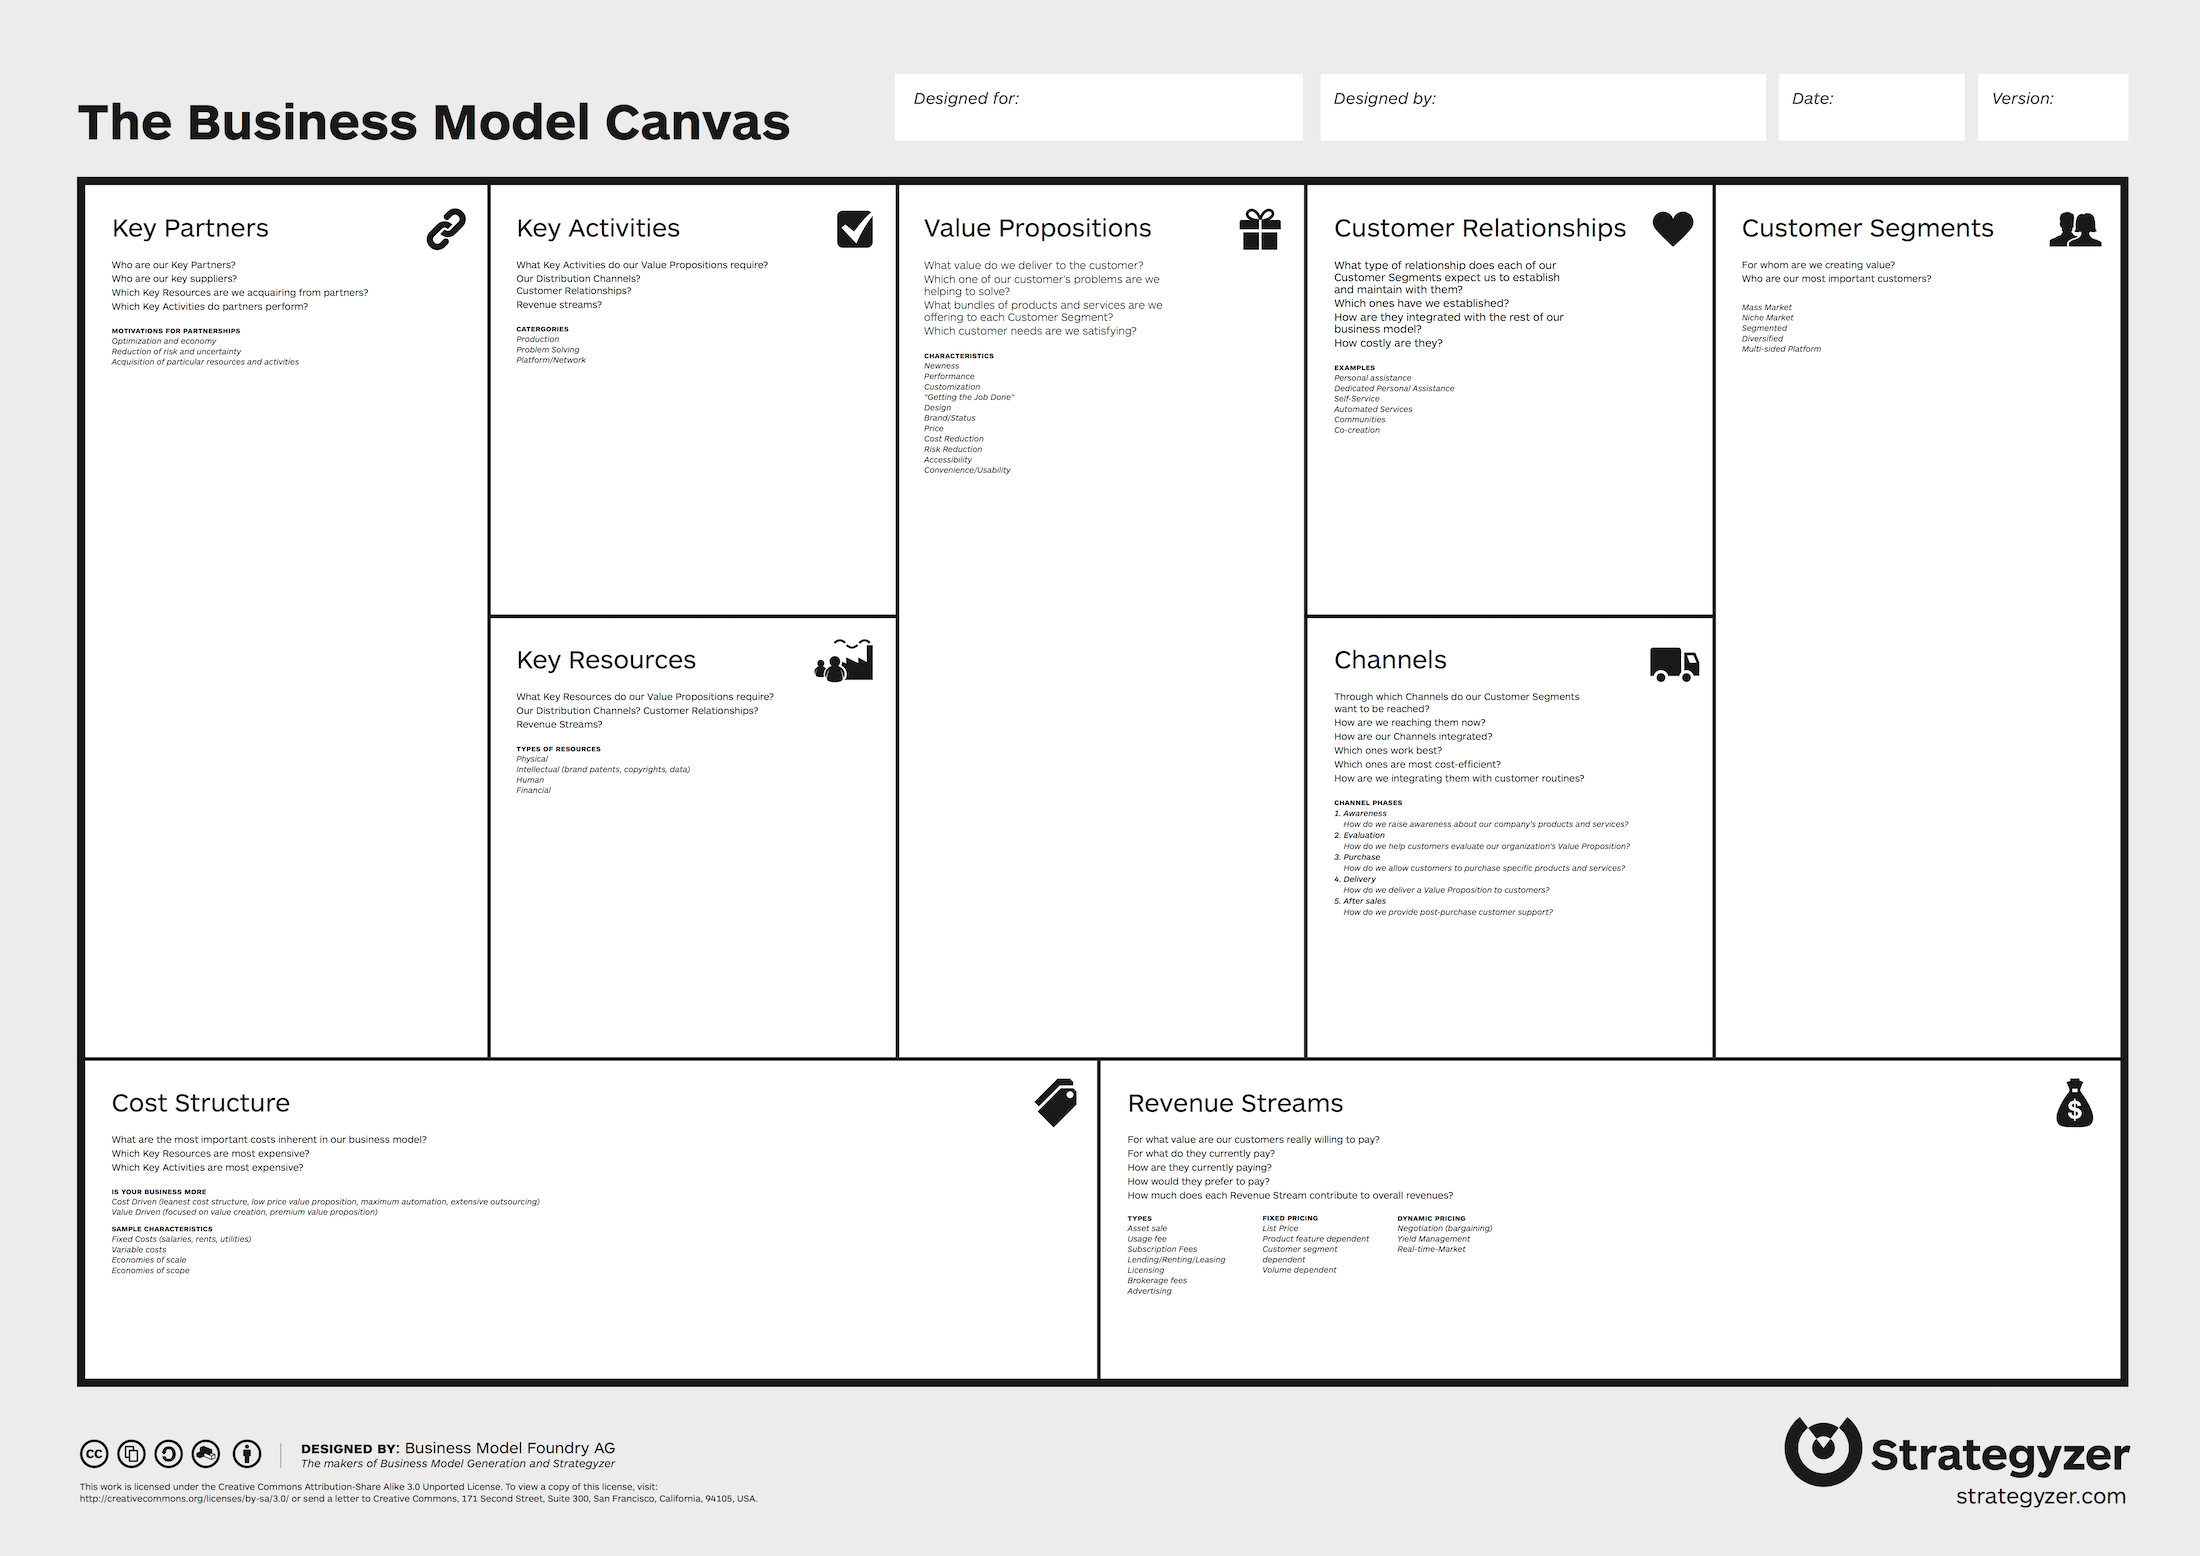 Business Model Canvas by Strategyzer